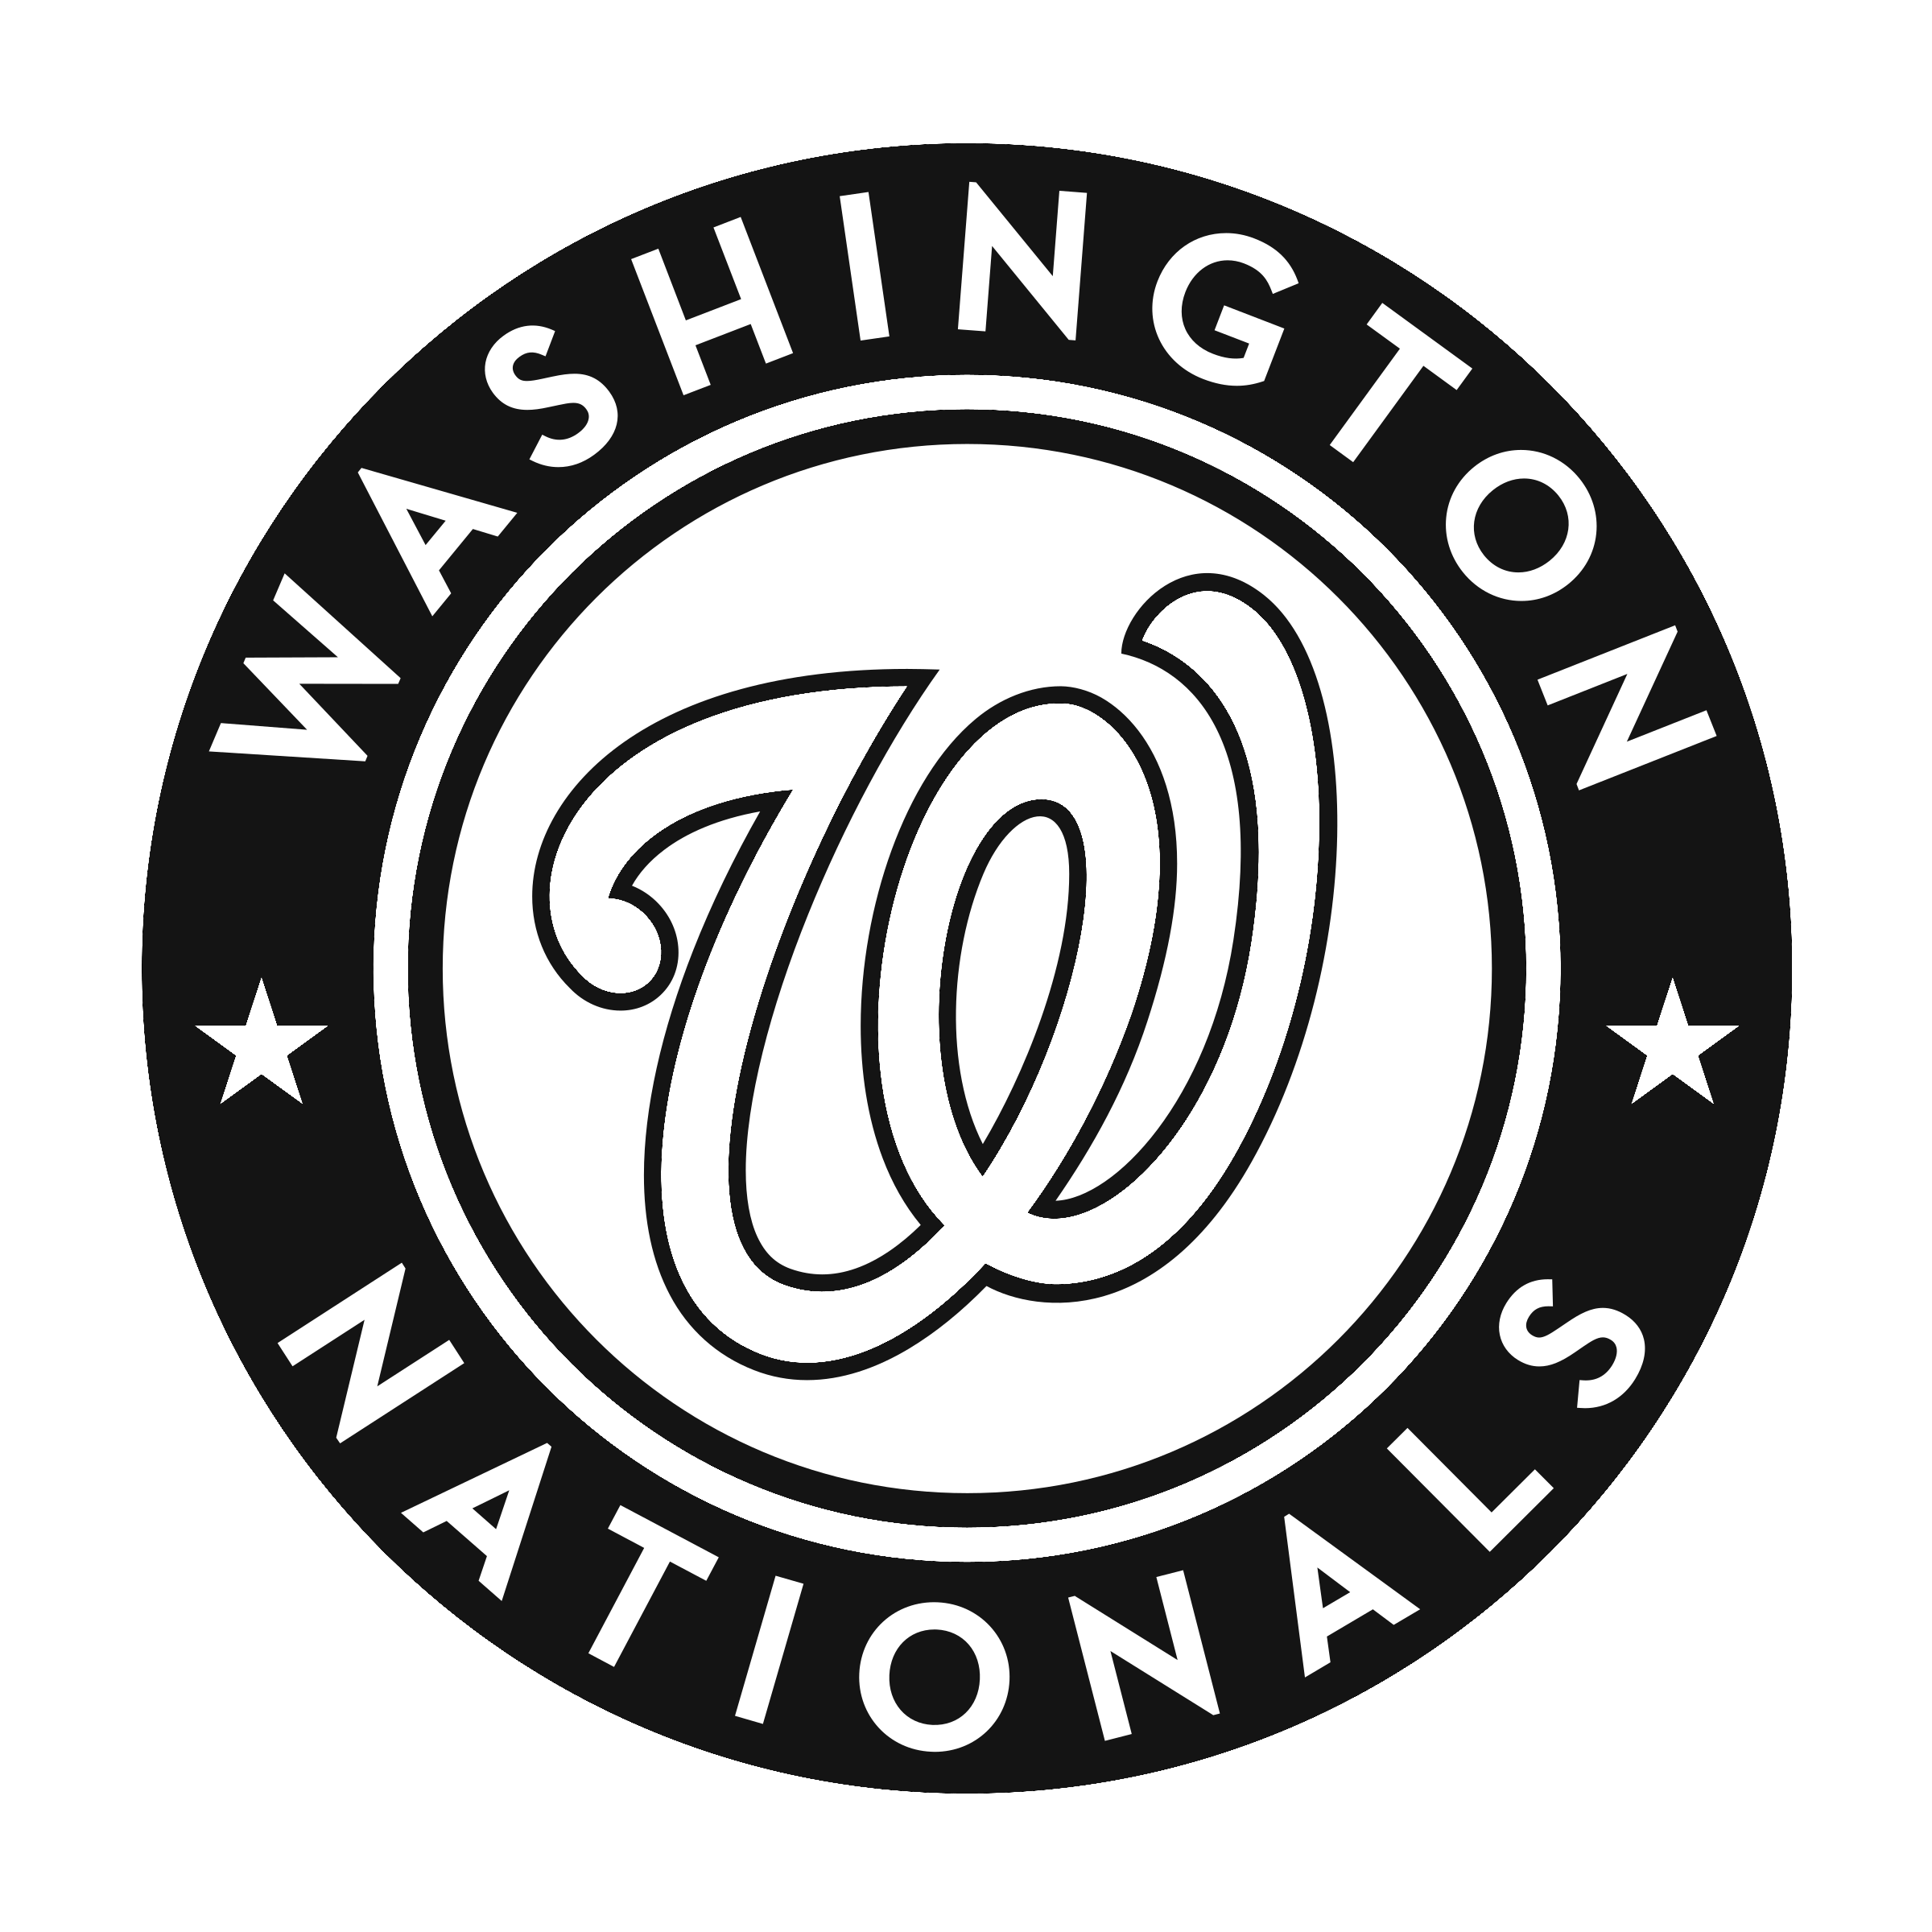 Washington Nationals Logo - Washington Nationals Logo PNG Transparent & SVG Vector - Freebie Supply